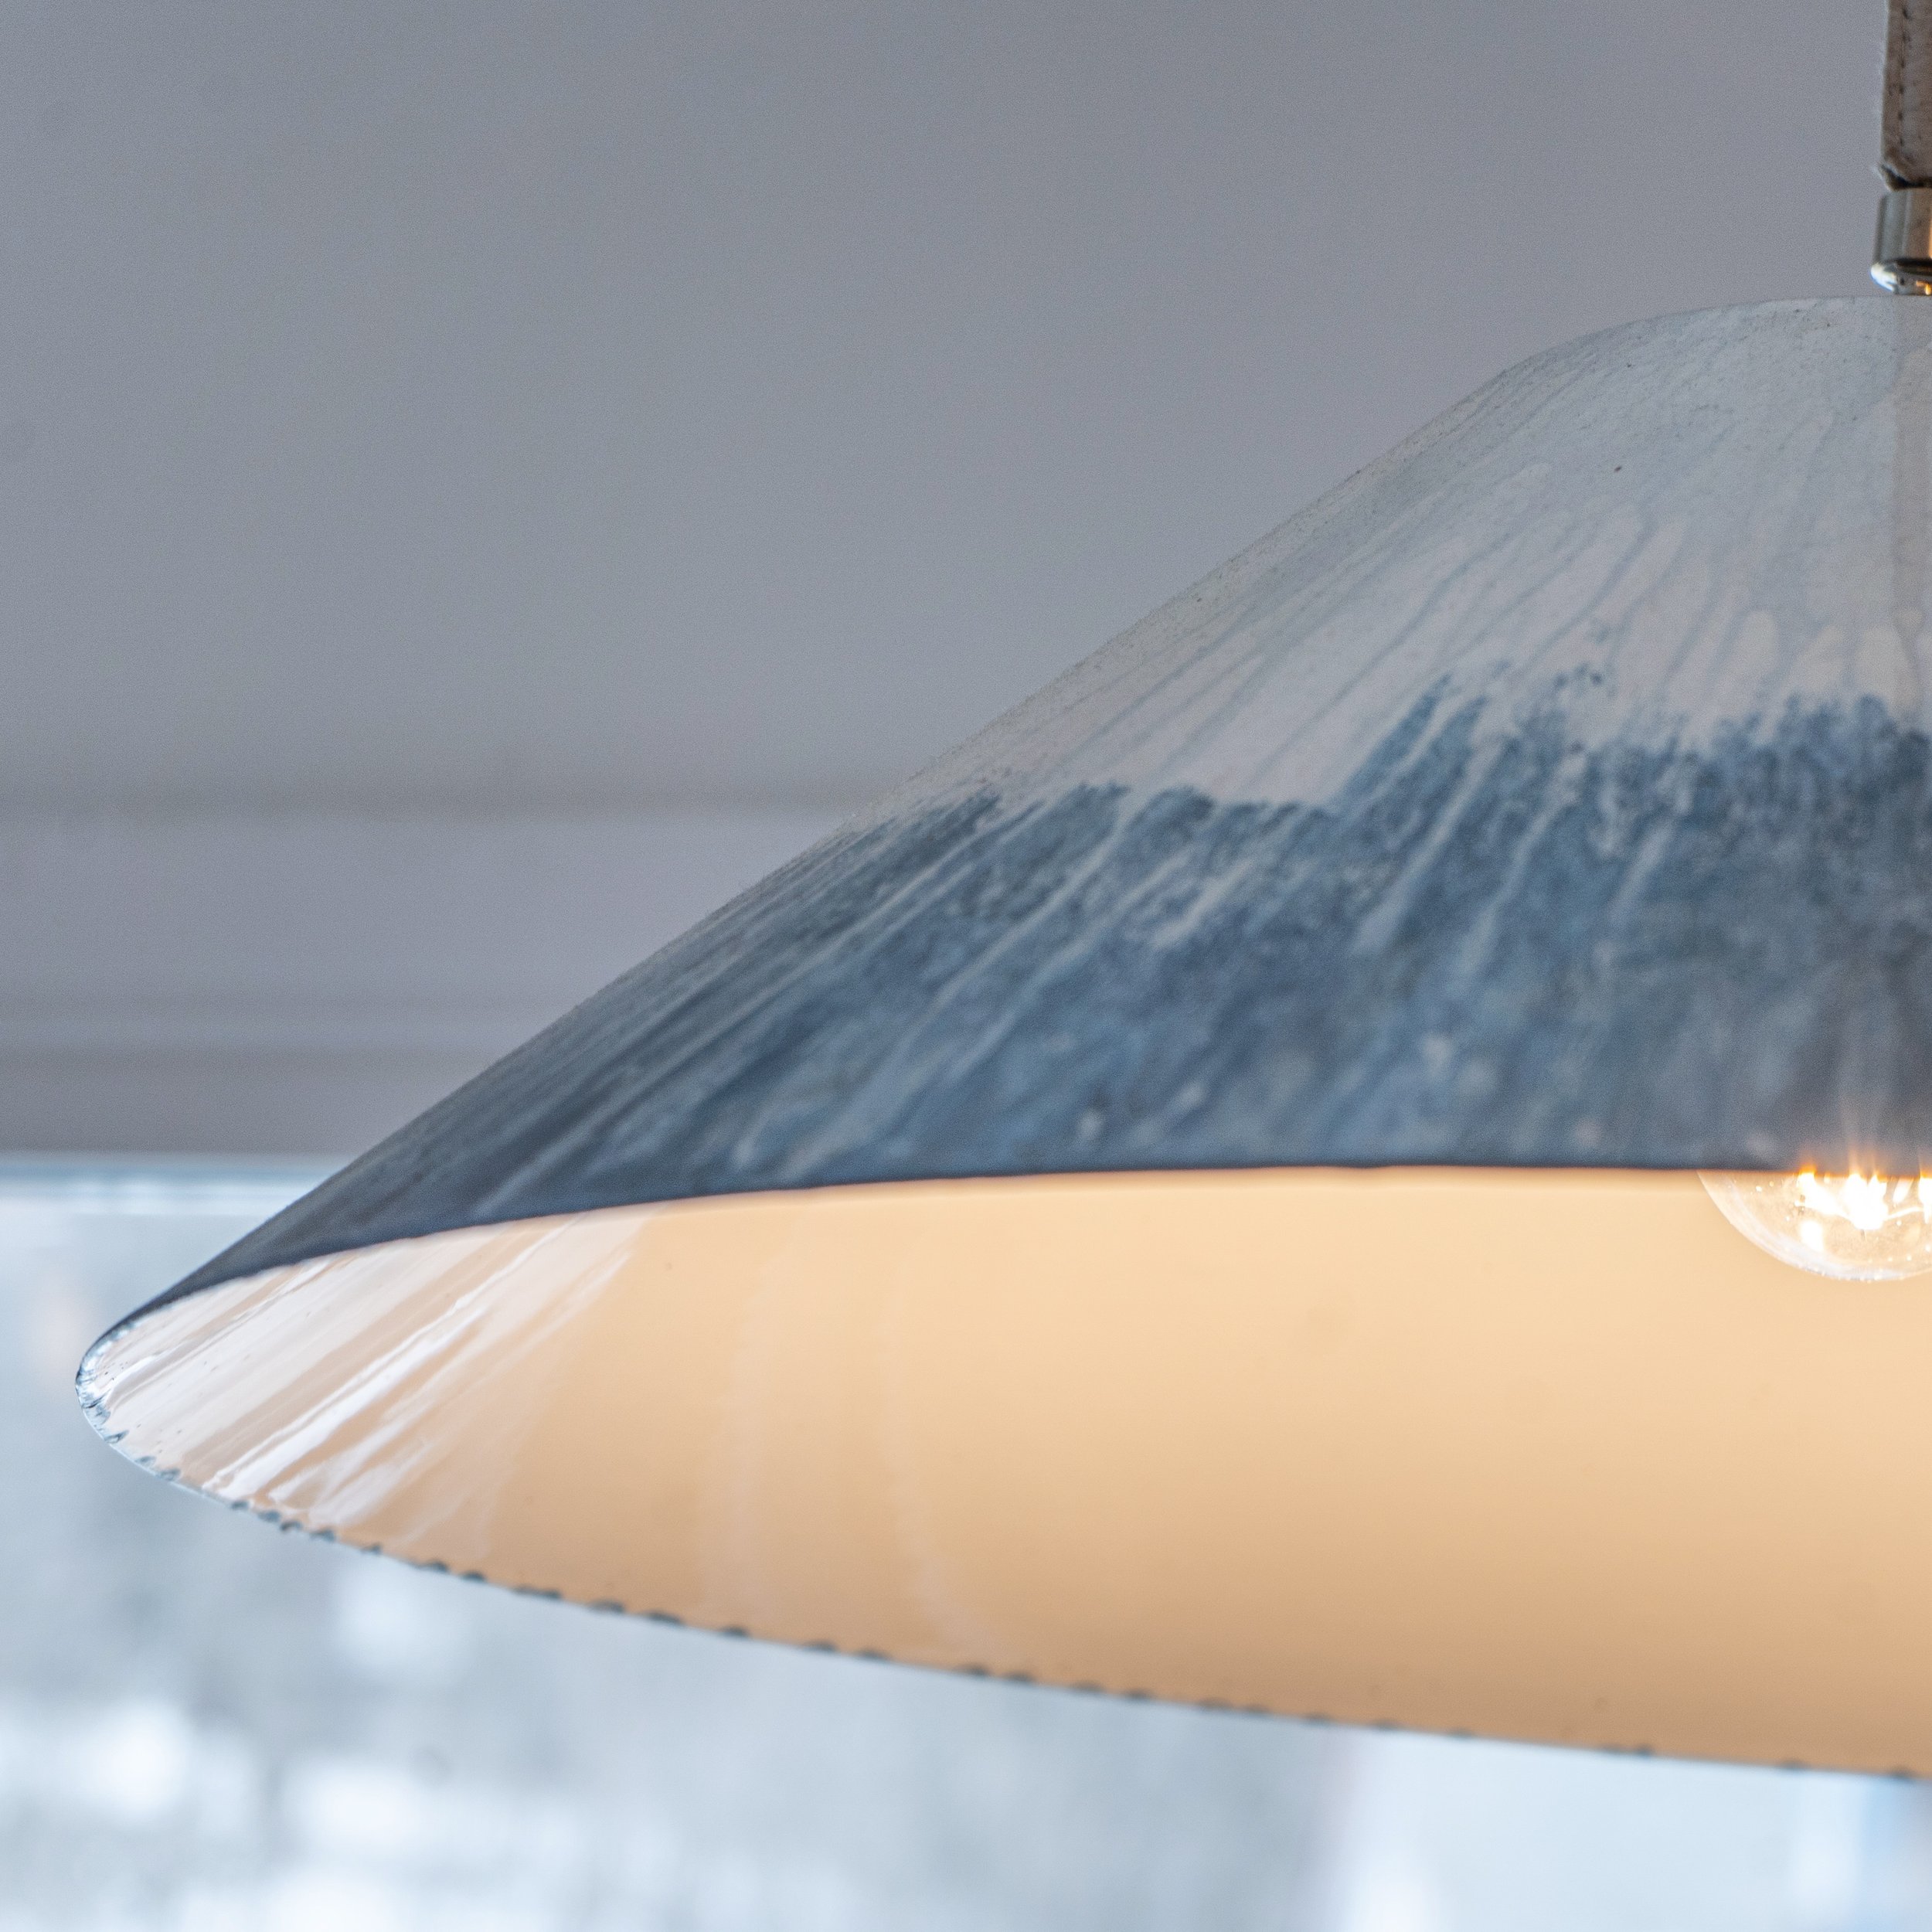 Close-up of our Porcelain Enamel Steel Barn Lamp.

▪️

#interiordesign #homedecor #industrialchic #jimzivicdesign #lightingdecor #lightfixture #lightinglove #luxurylighting #interiordecor #homelighting